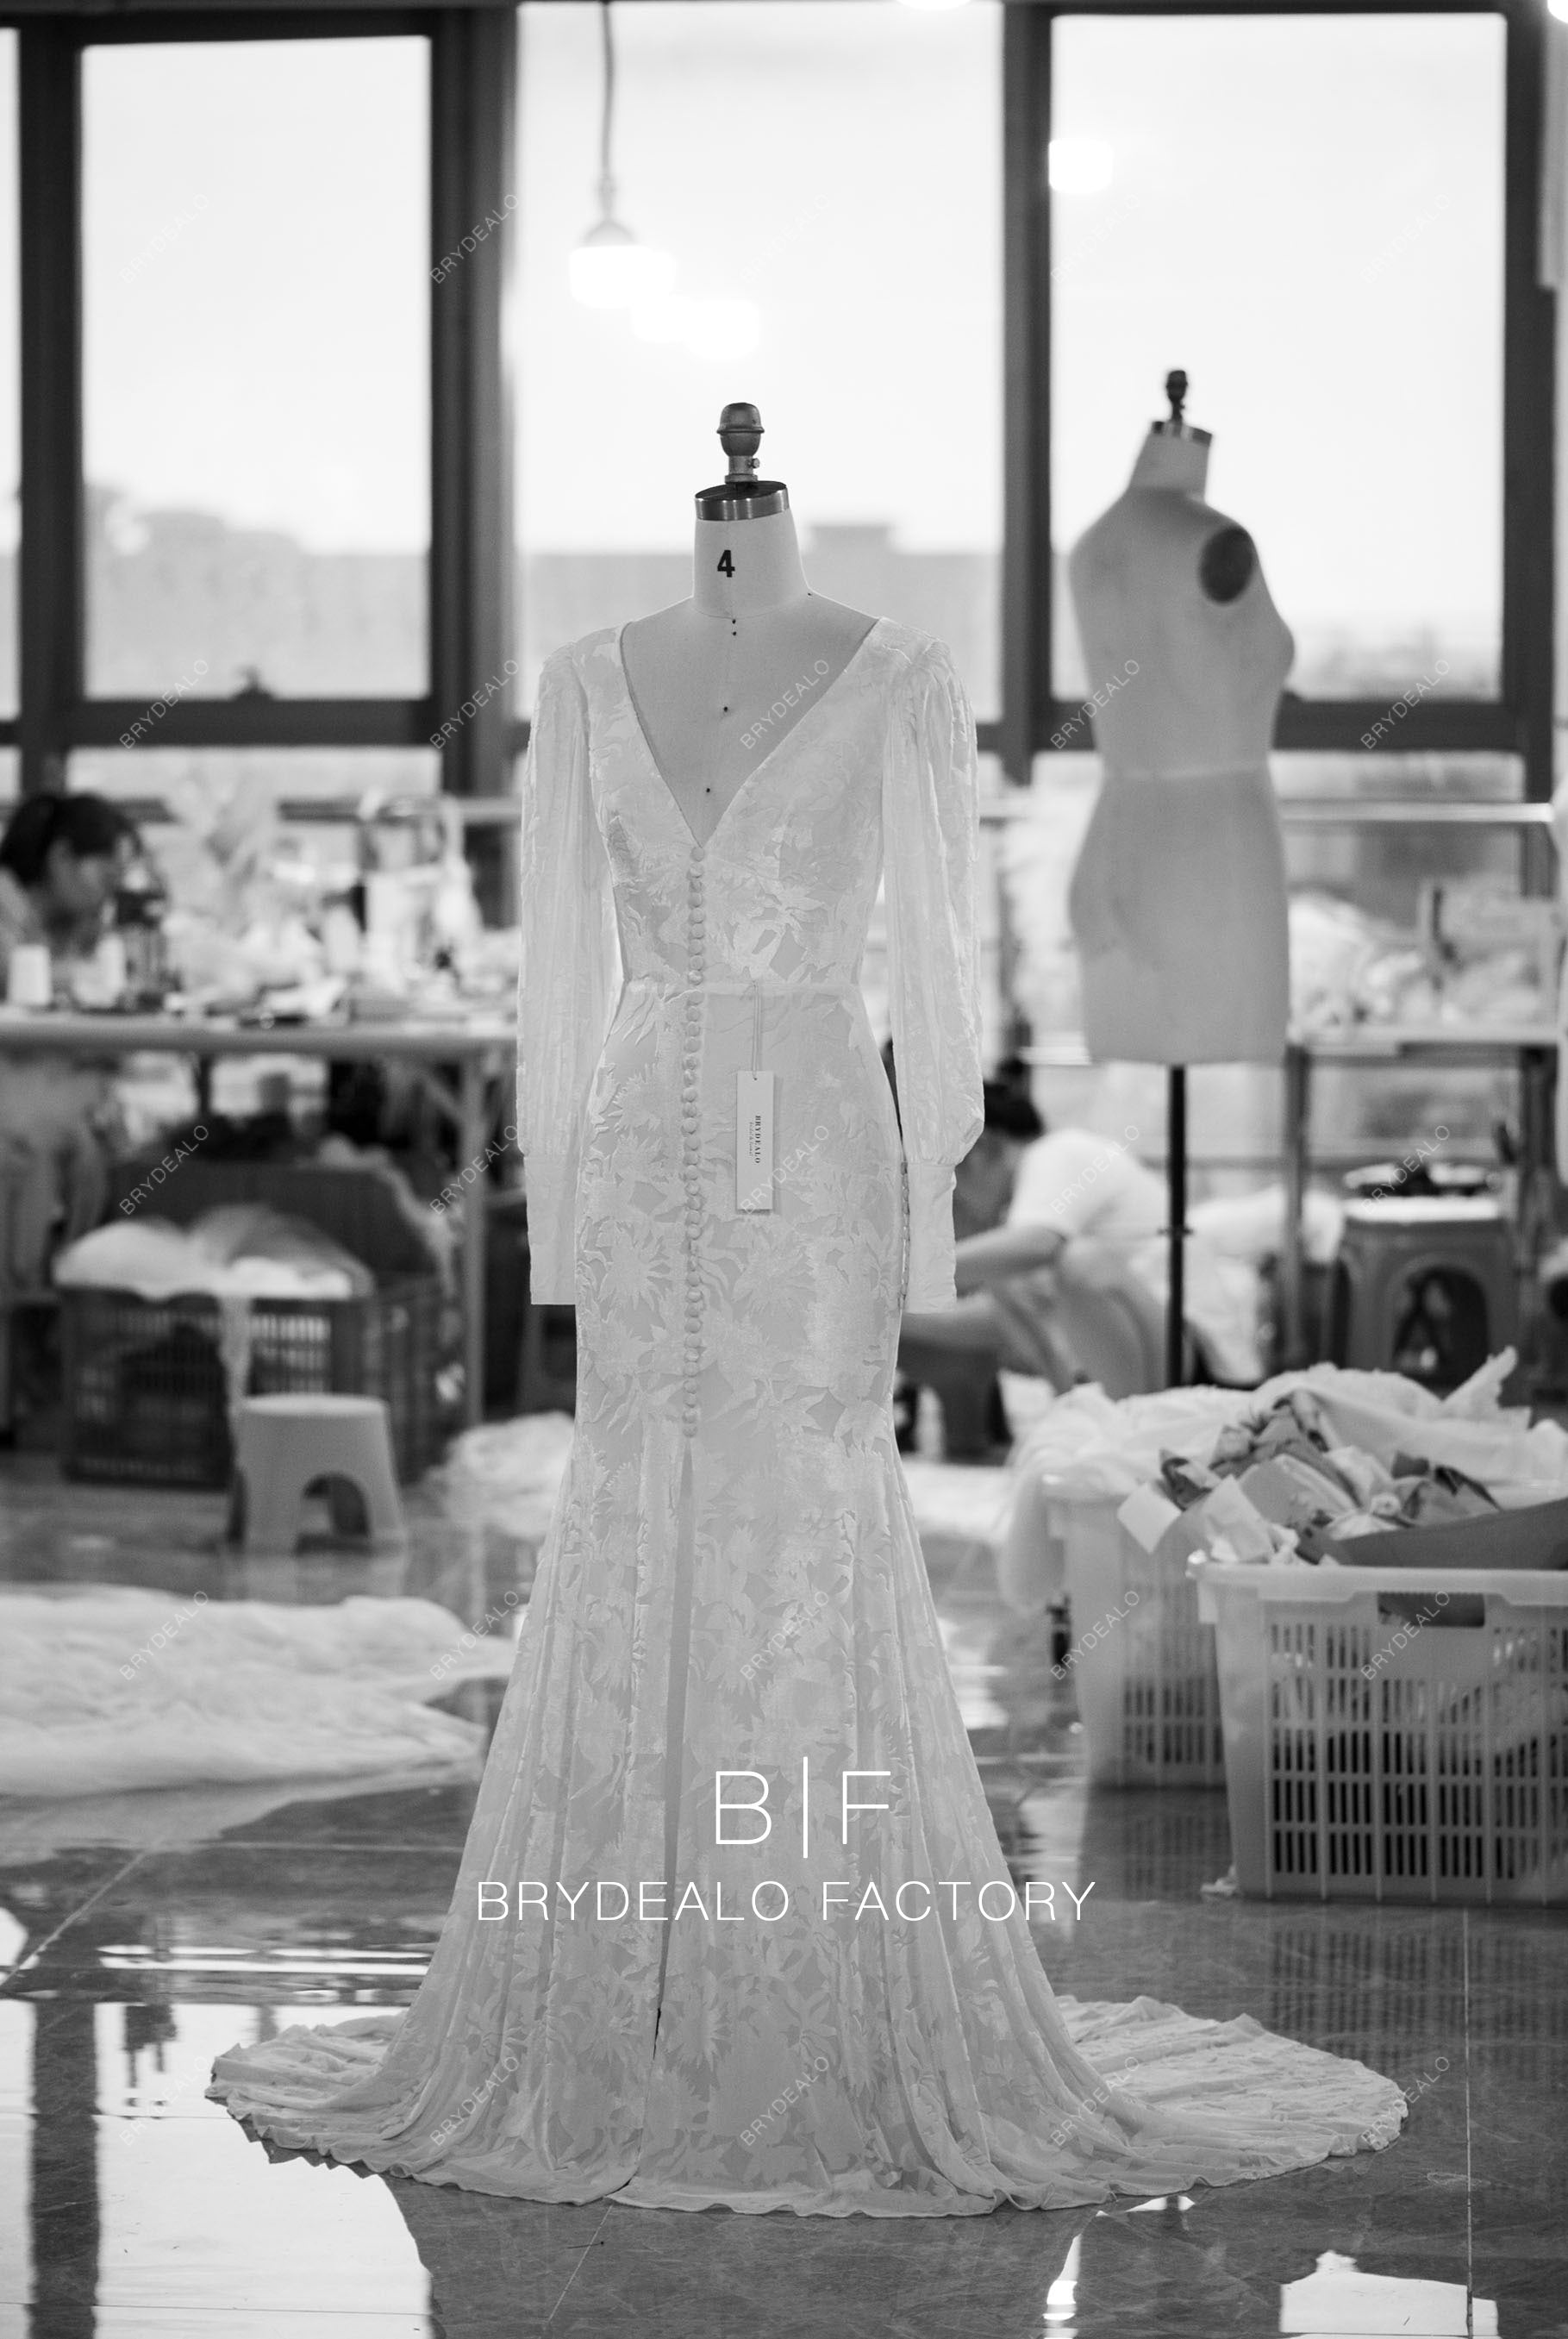 Velvet Bridesmaids Dresses 2021 Sneak Peek | DaVinci Bridal